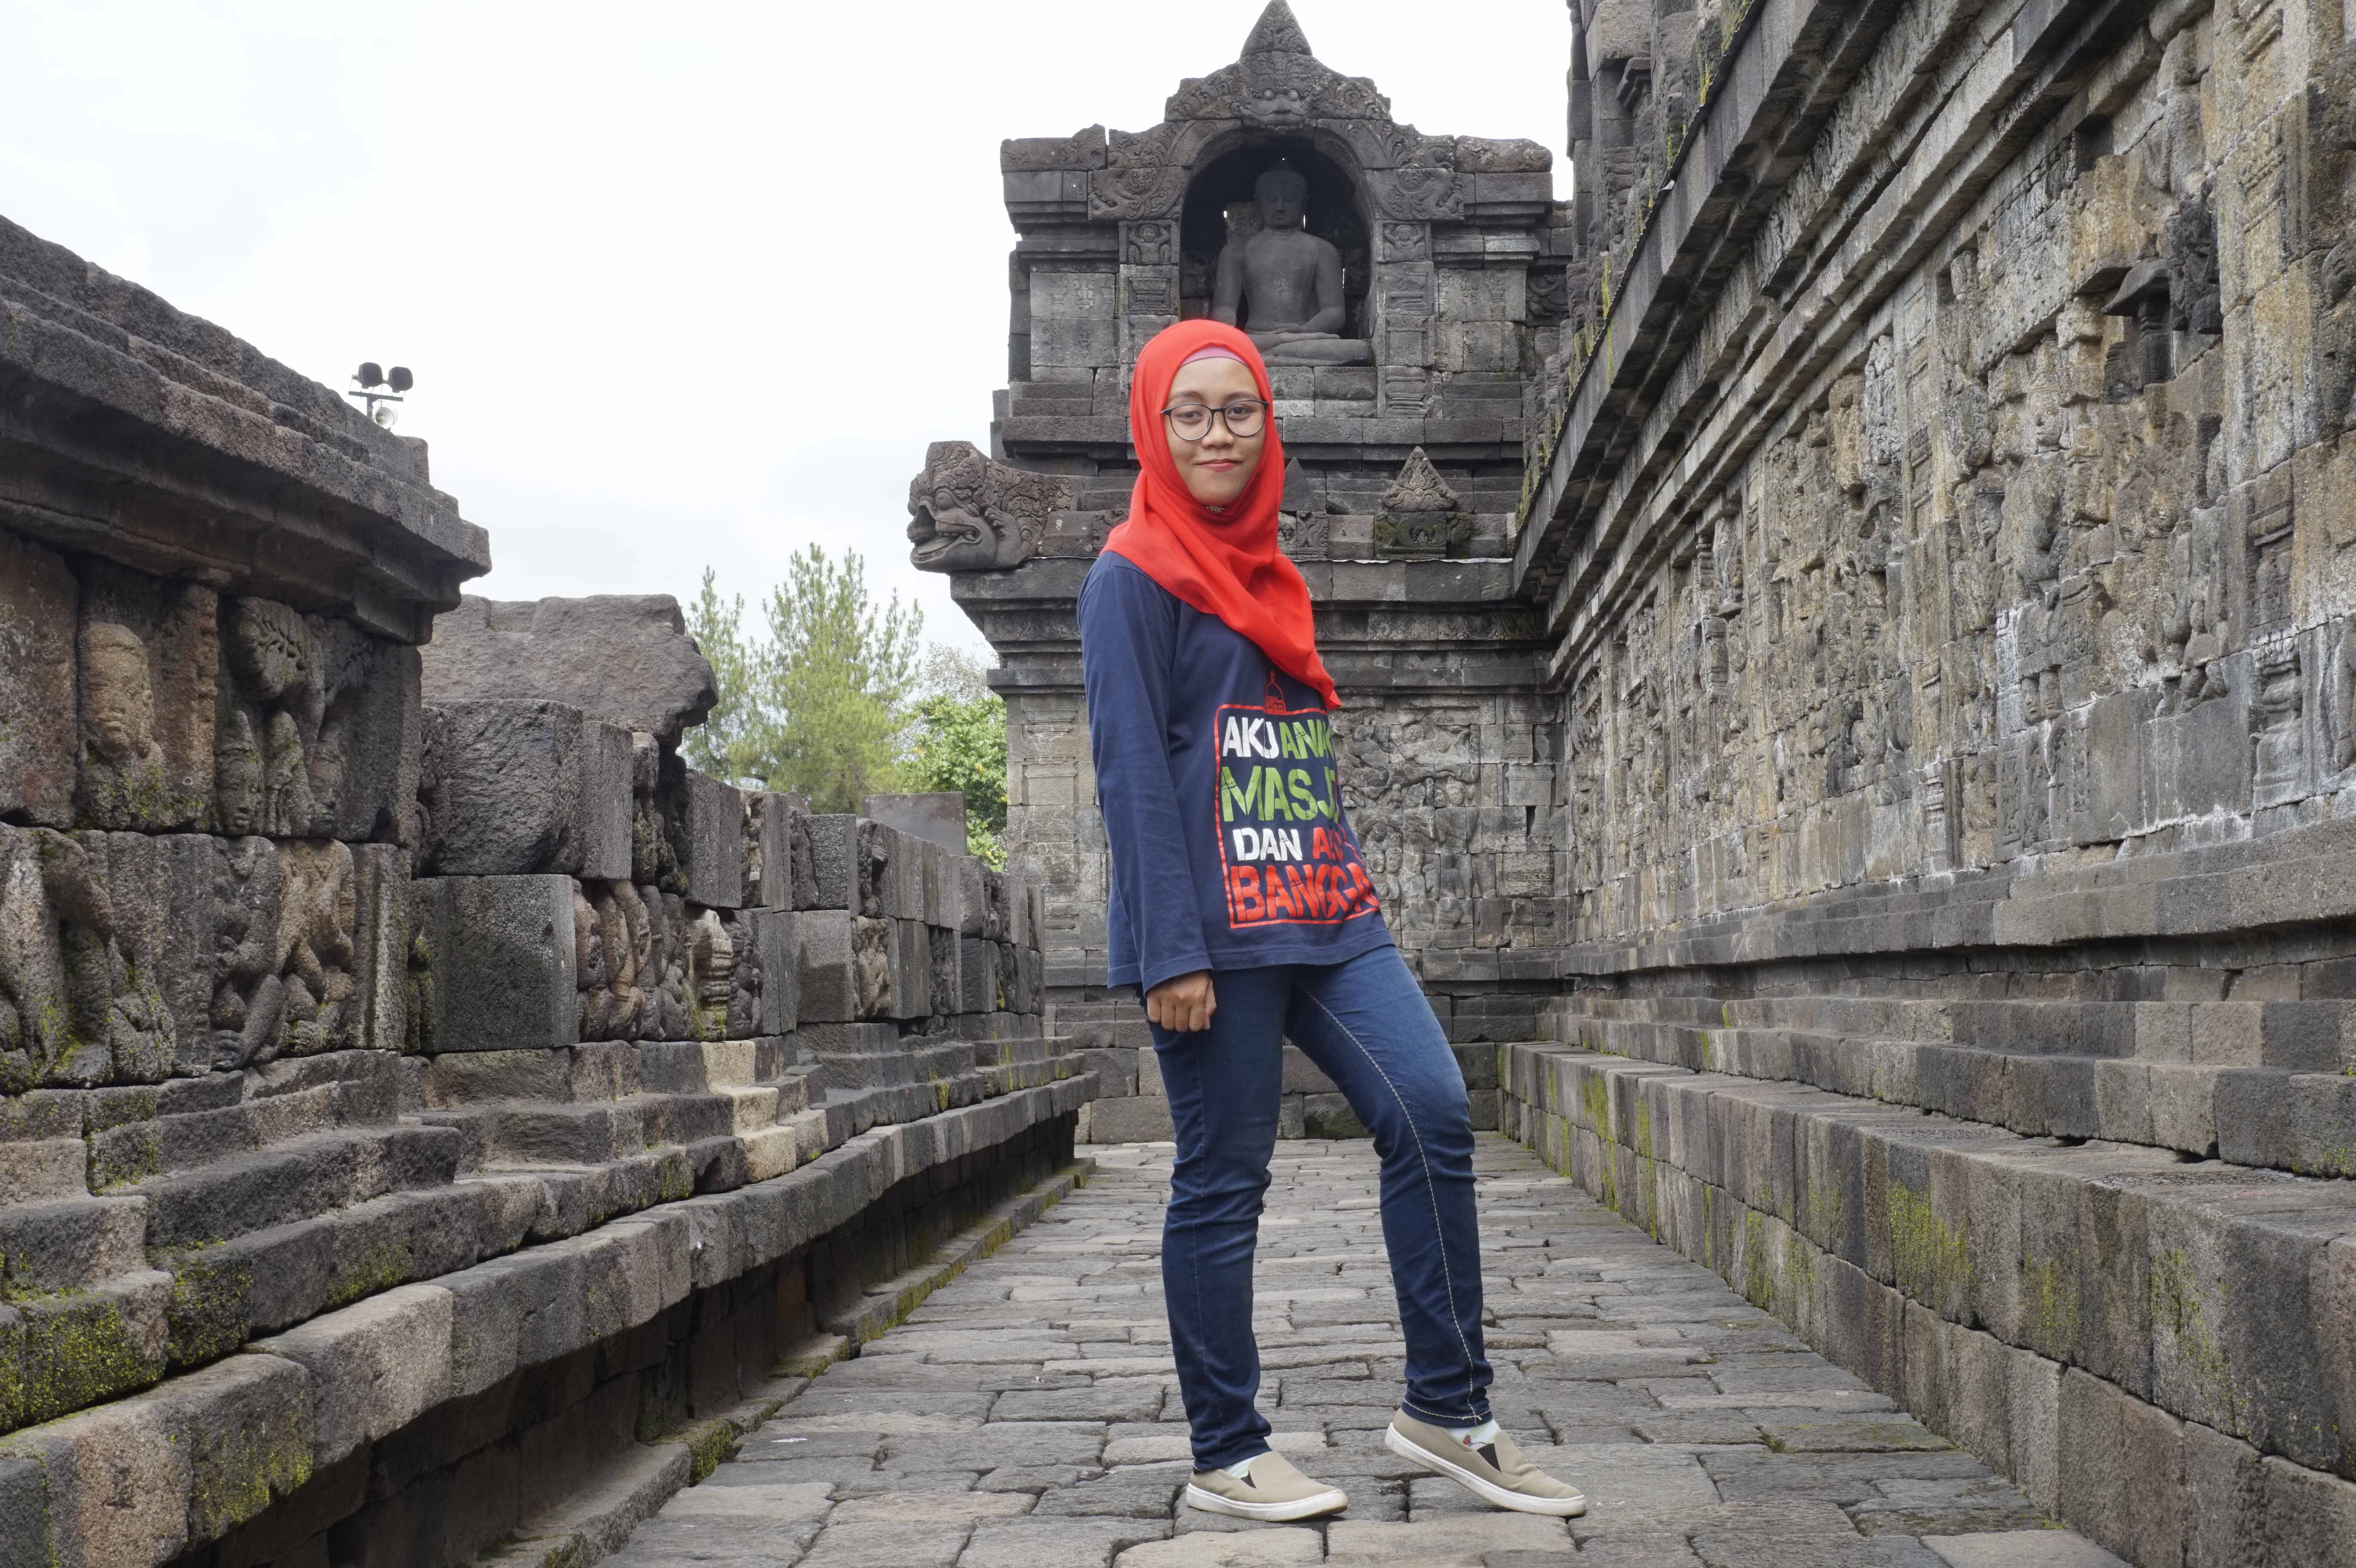 Pemandangan di Dalam Candi Borobudur (c) Alviani Suwoko/Travelingyuk